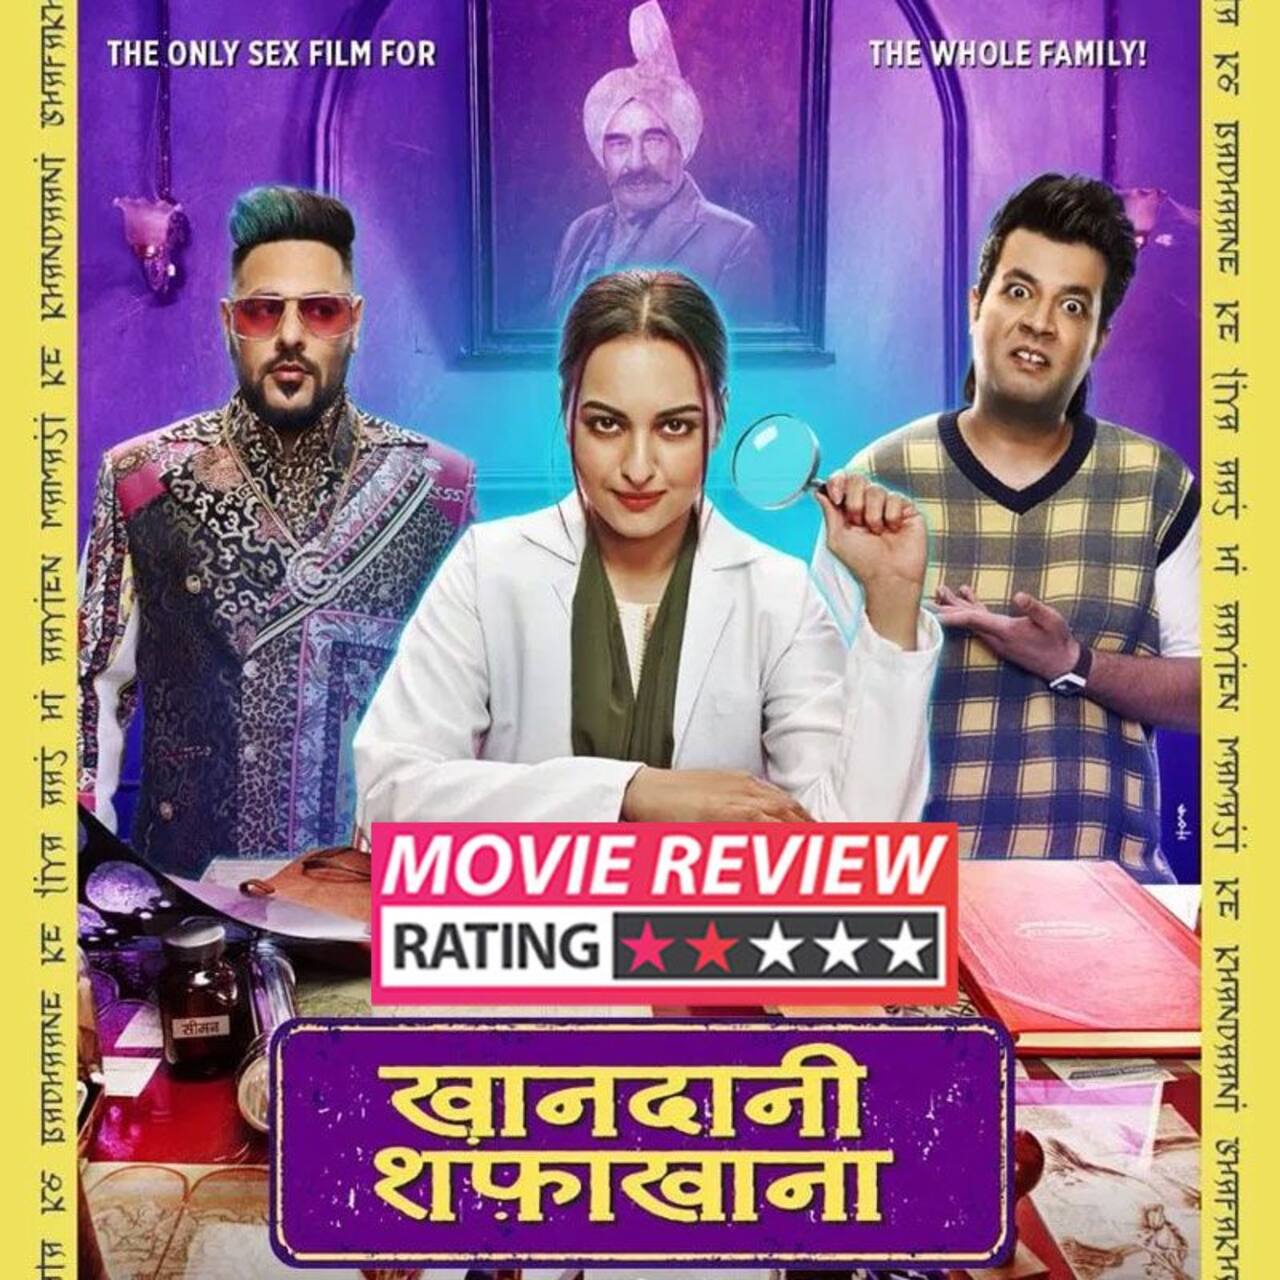 Khandaani Shafakhana Movie Review Sonakshi Sinha S Impressive Performance Is Undone By An